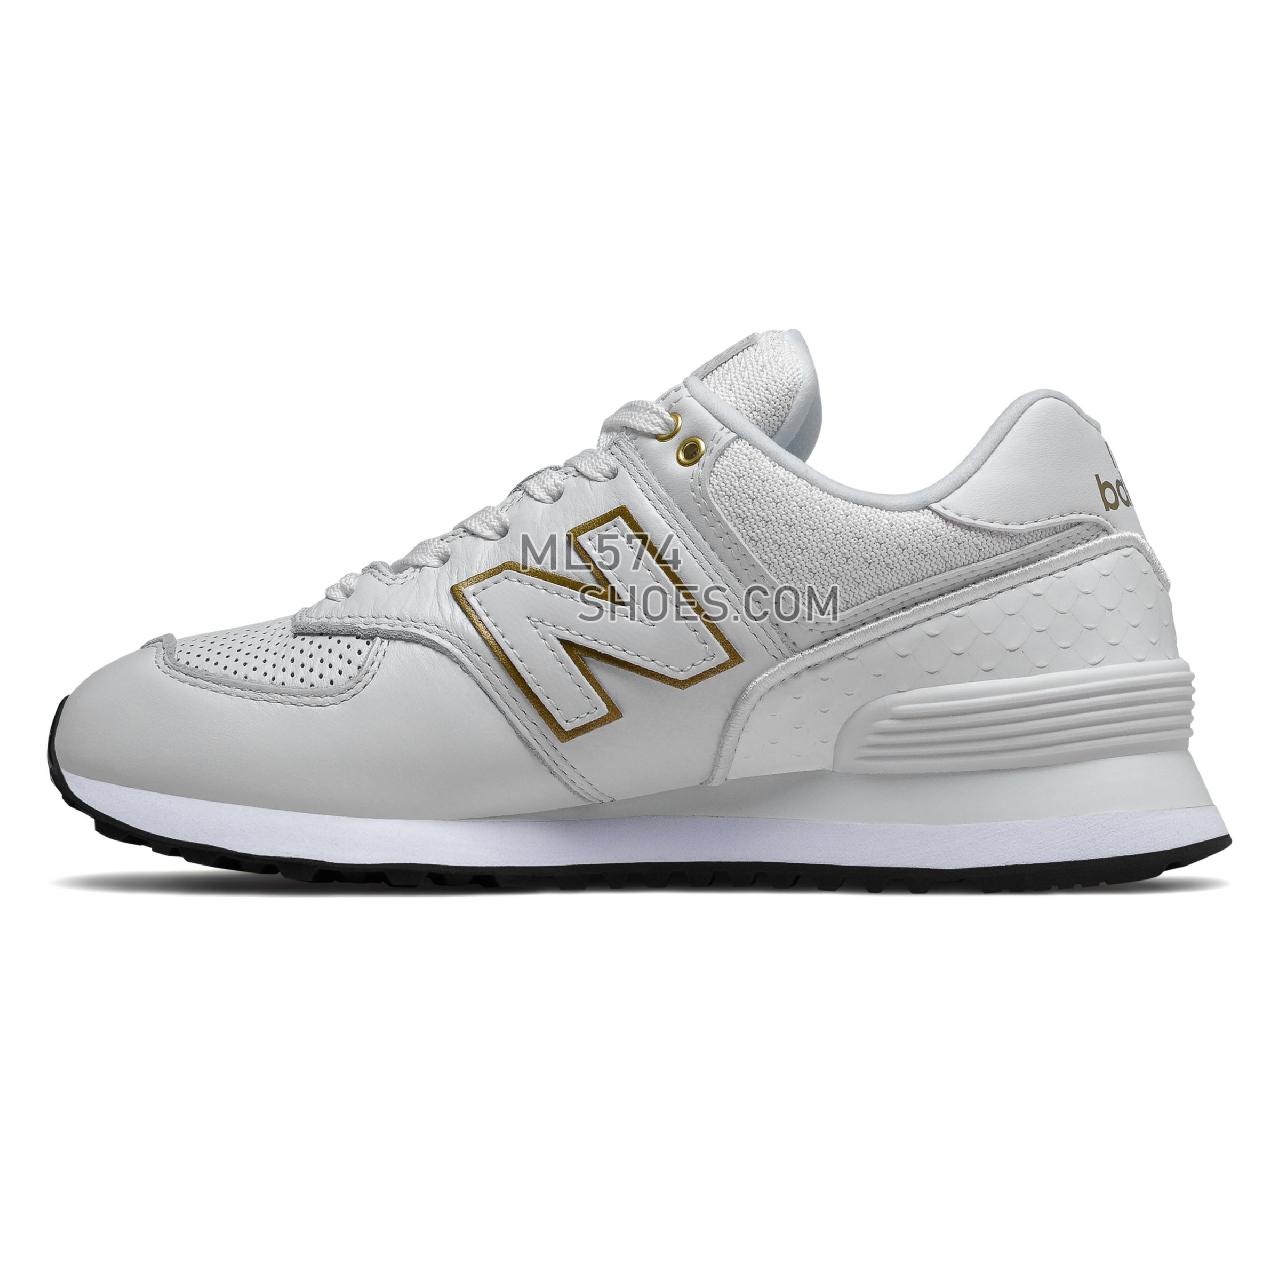 New Balance 574 - Women's Classic Sneakers - White with Metallic Gold - WL574LDE